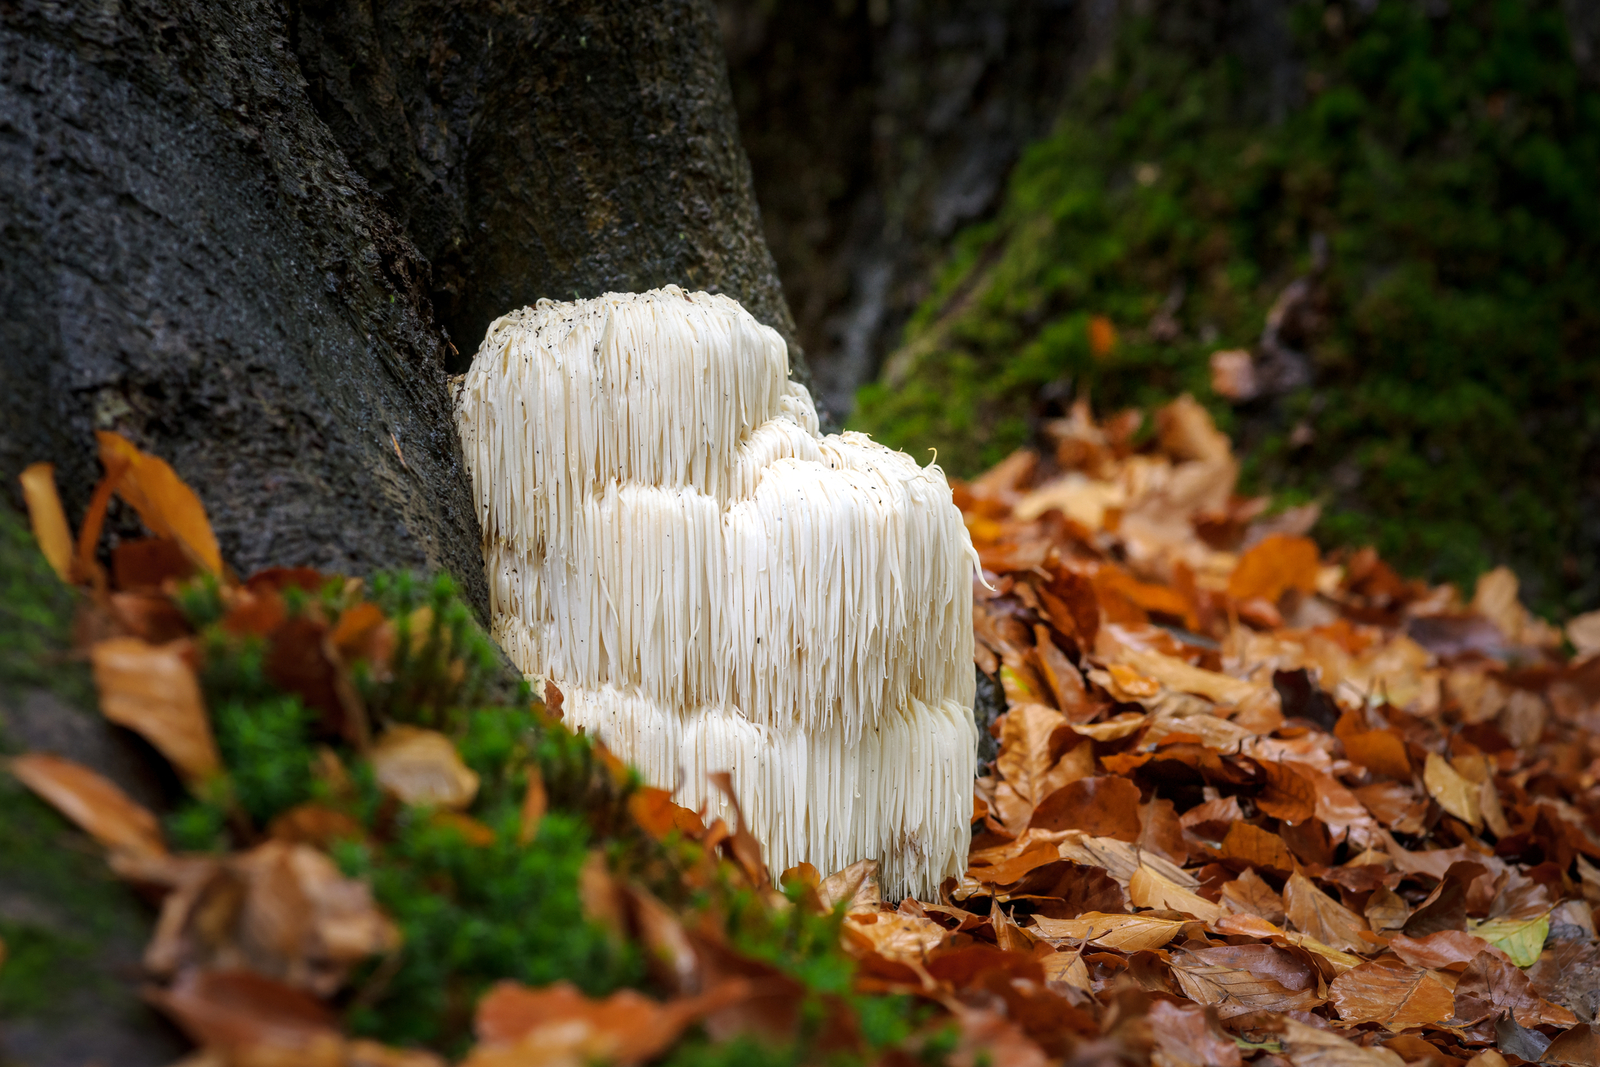 Rare lion's mane mushroom in a Dutch forest. Image Credit: © Fotografiecor | Dreamstime.com.